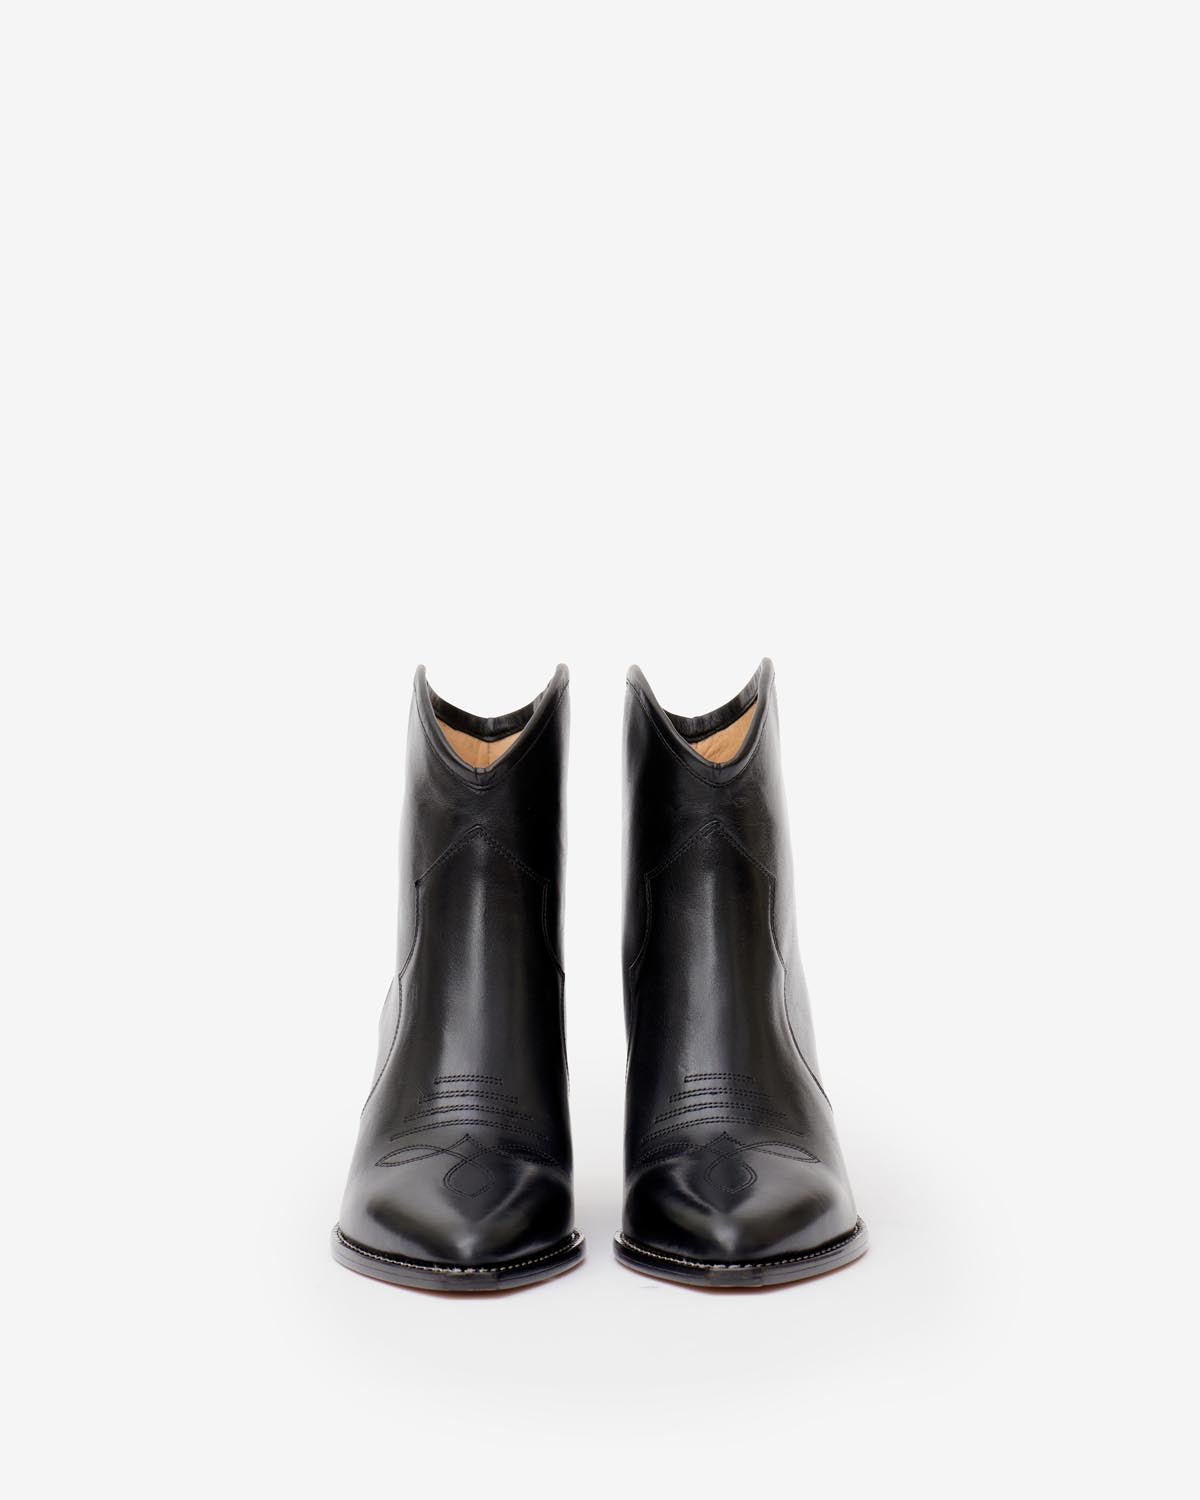 Boots darizo Woman Noir 2